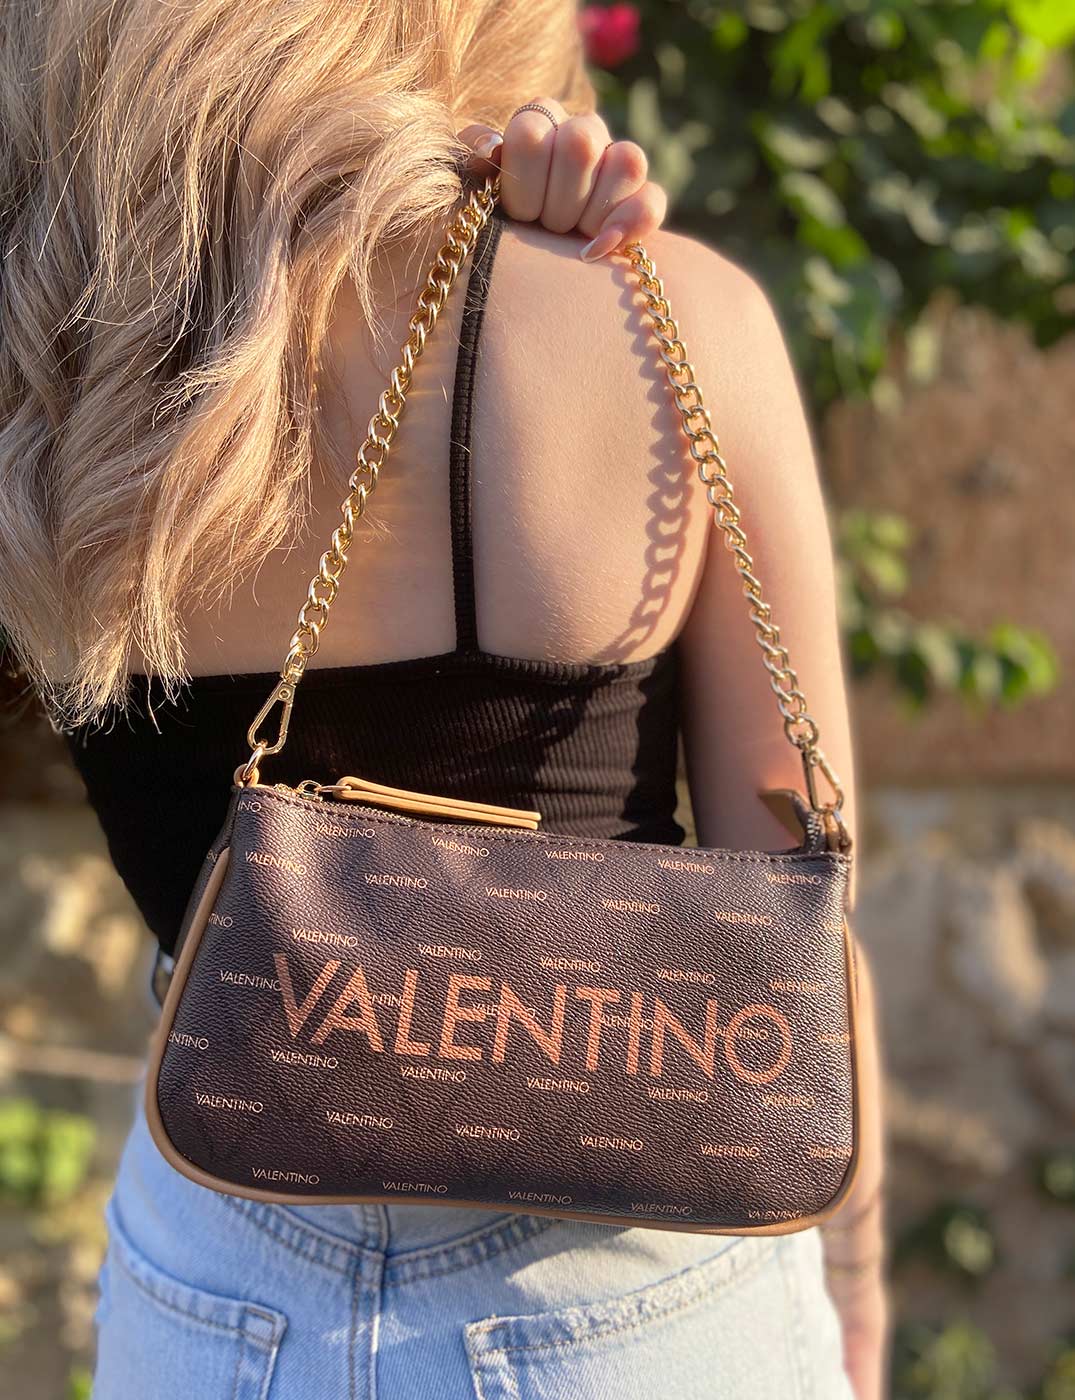 valentino liuto shoulder bag